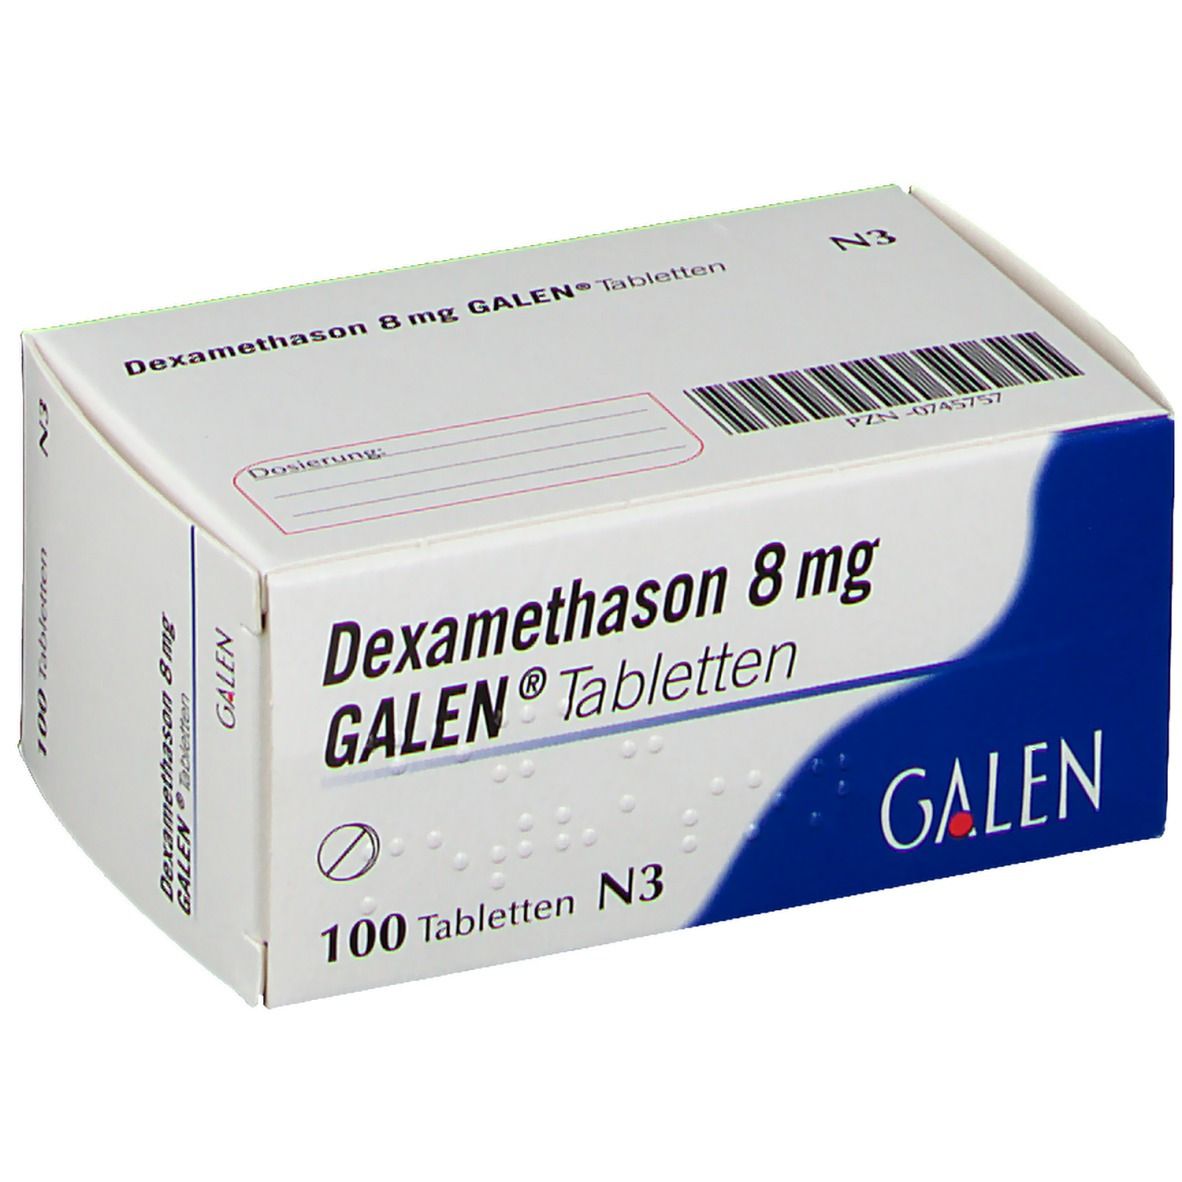 Dexamethason 8 mg GALEN®